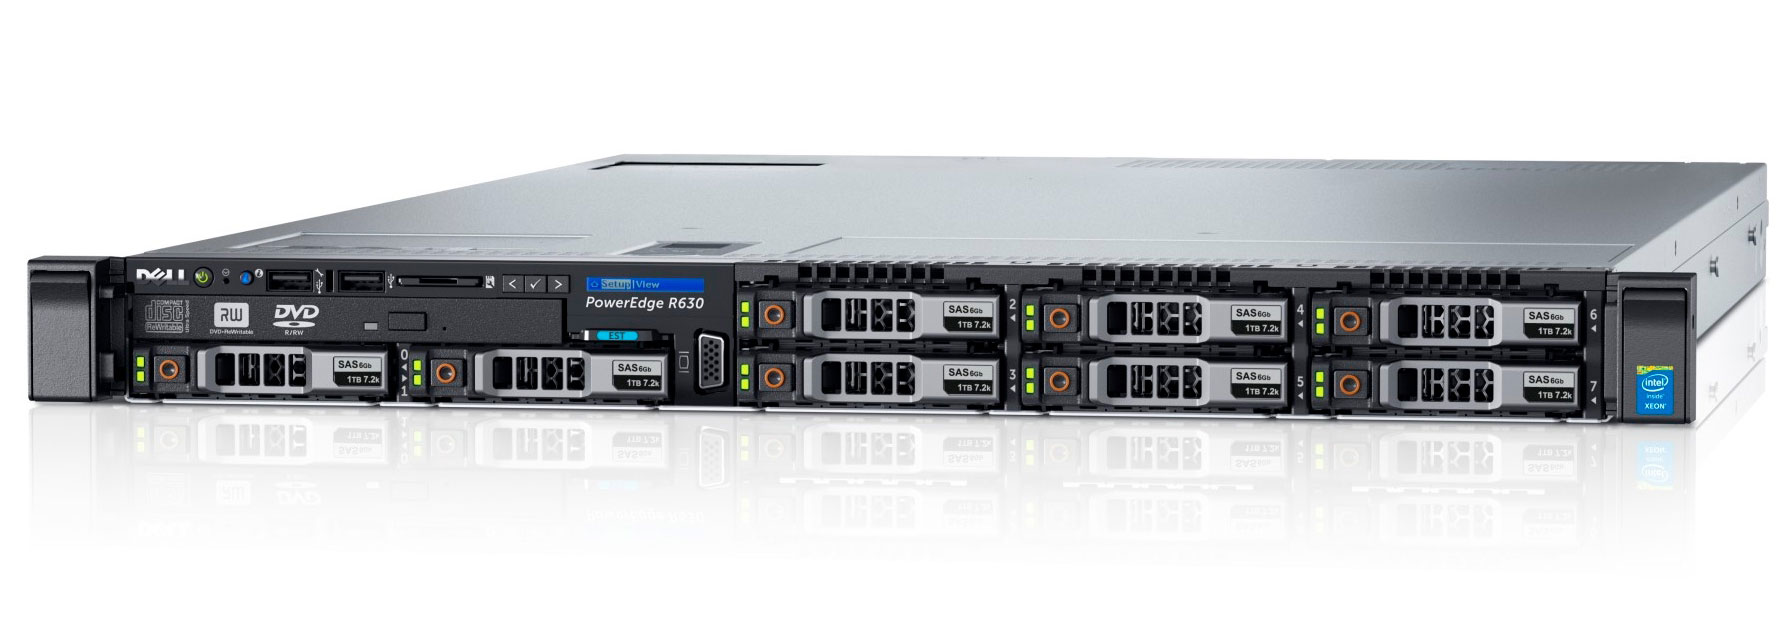 Подробное фото Сервер DELL PowerEdge R630 Xeon 2x E5-2690v4 192Gb DDR4 2133P 8x noHDD 2.5", SAS RAID Perc H730, 1024Mb, DVD, 2*PSU